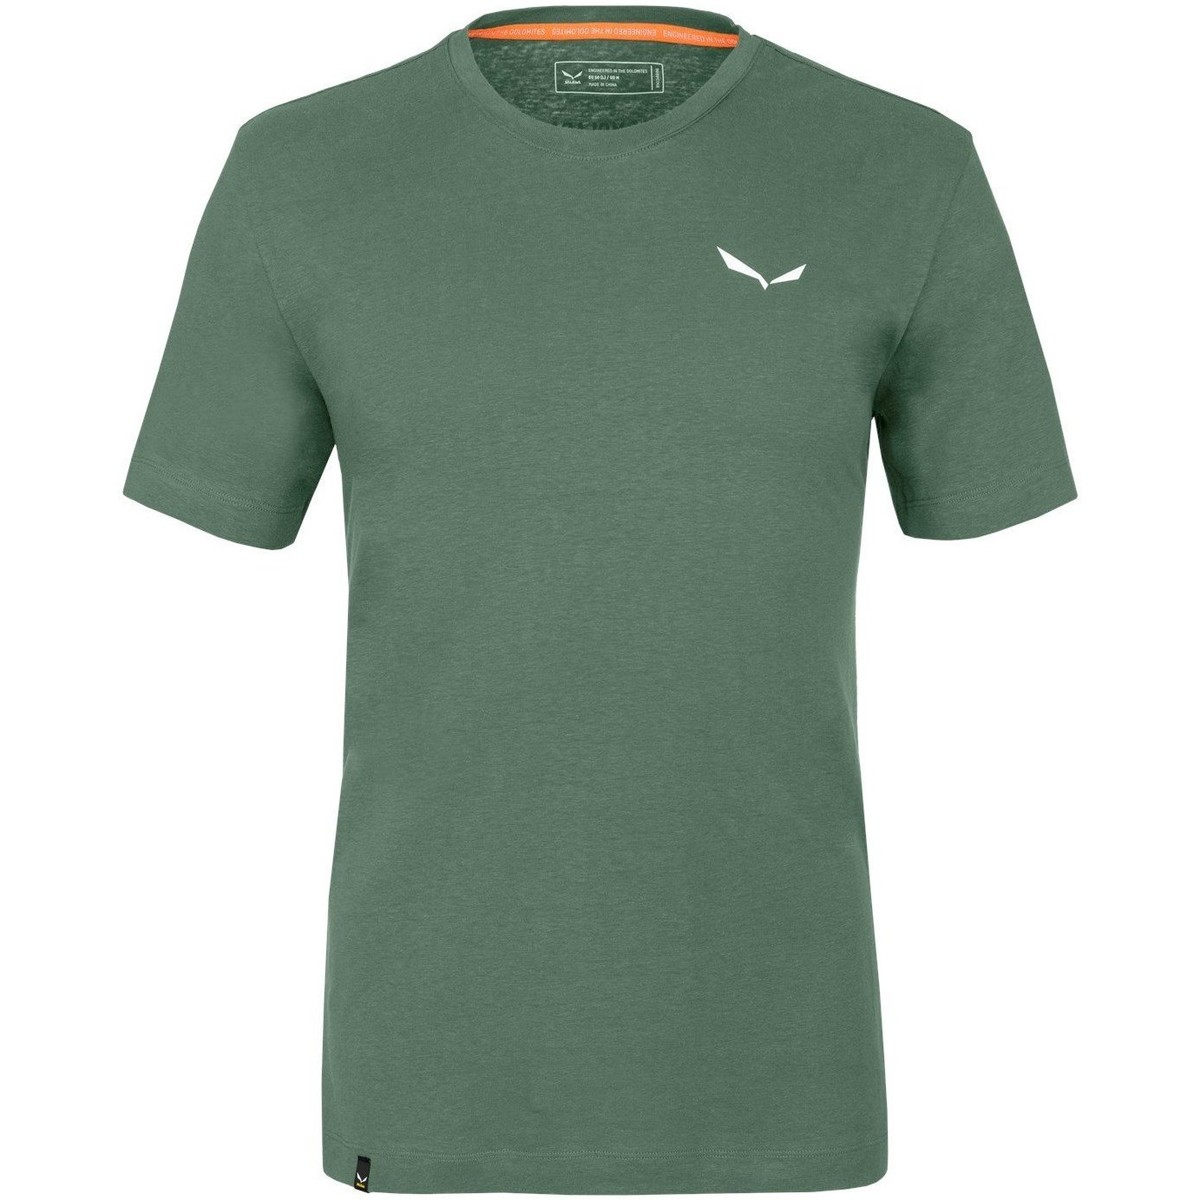 Kleidung Herren T-Shirts & Poloshirts Salewa Pure Dolomites Hemp Men's T-Shirt 28329-5320 Grün